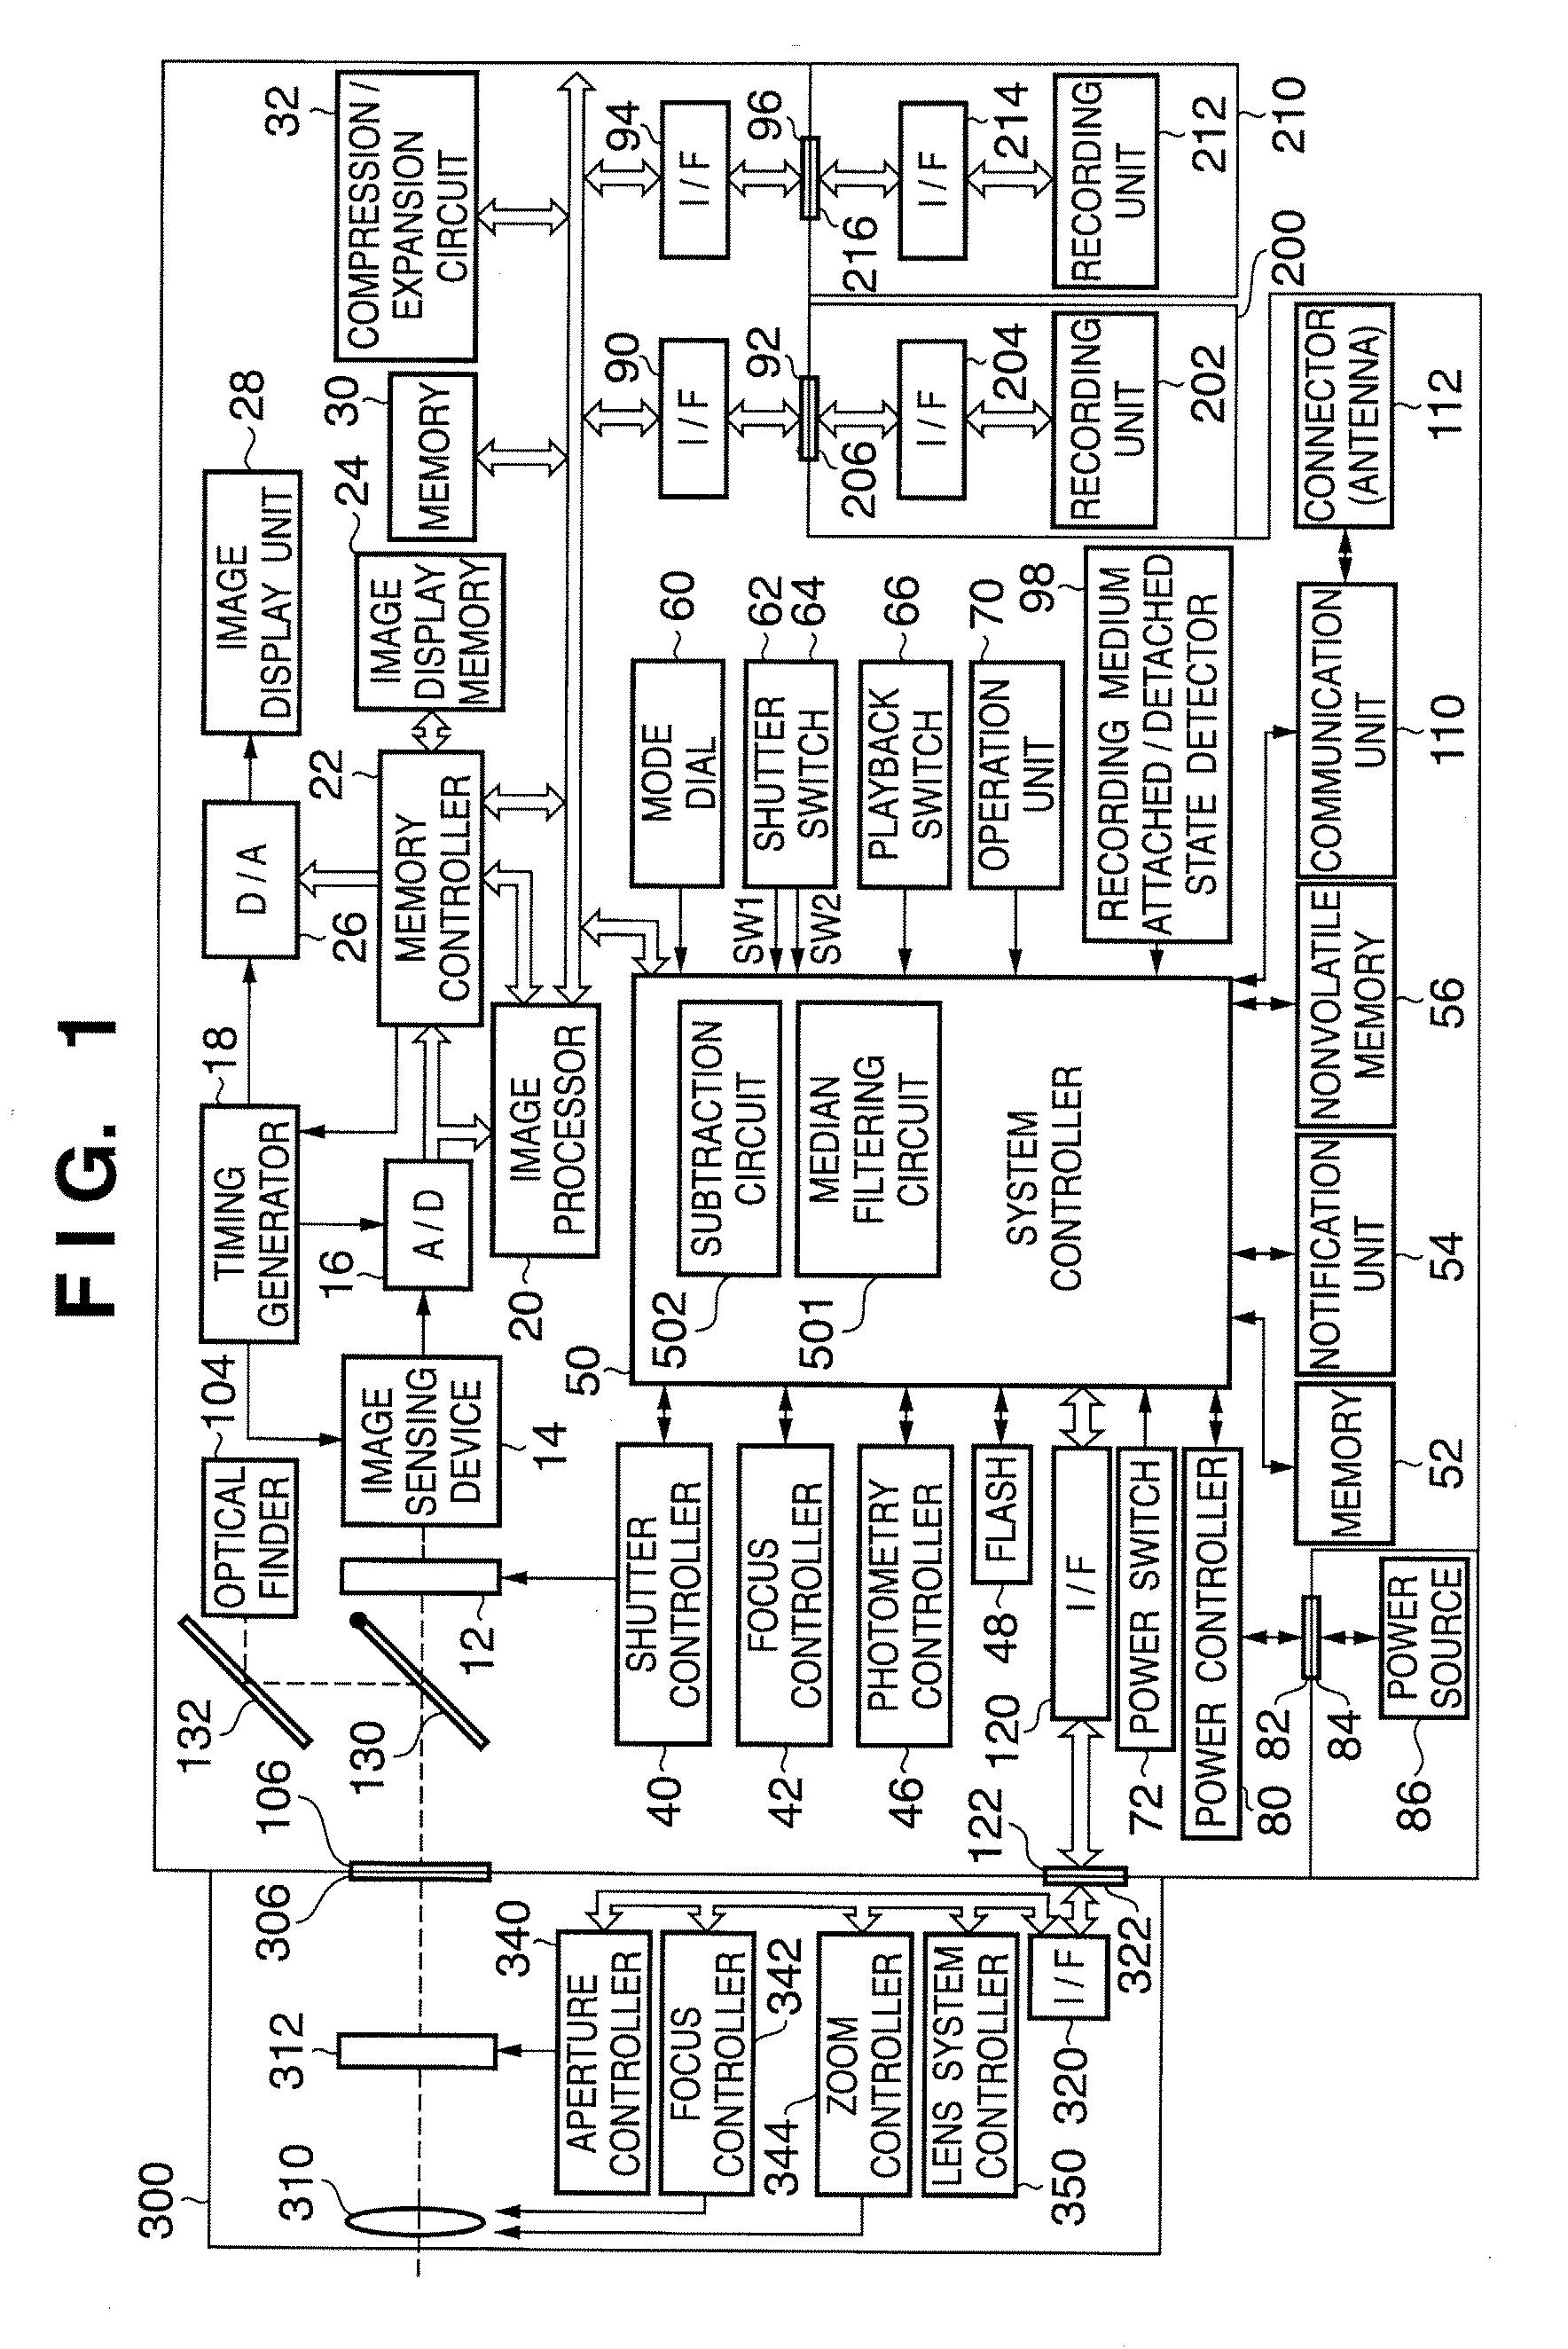 Image sensing apparatus and correction method